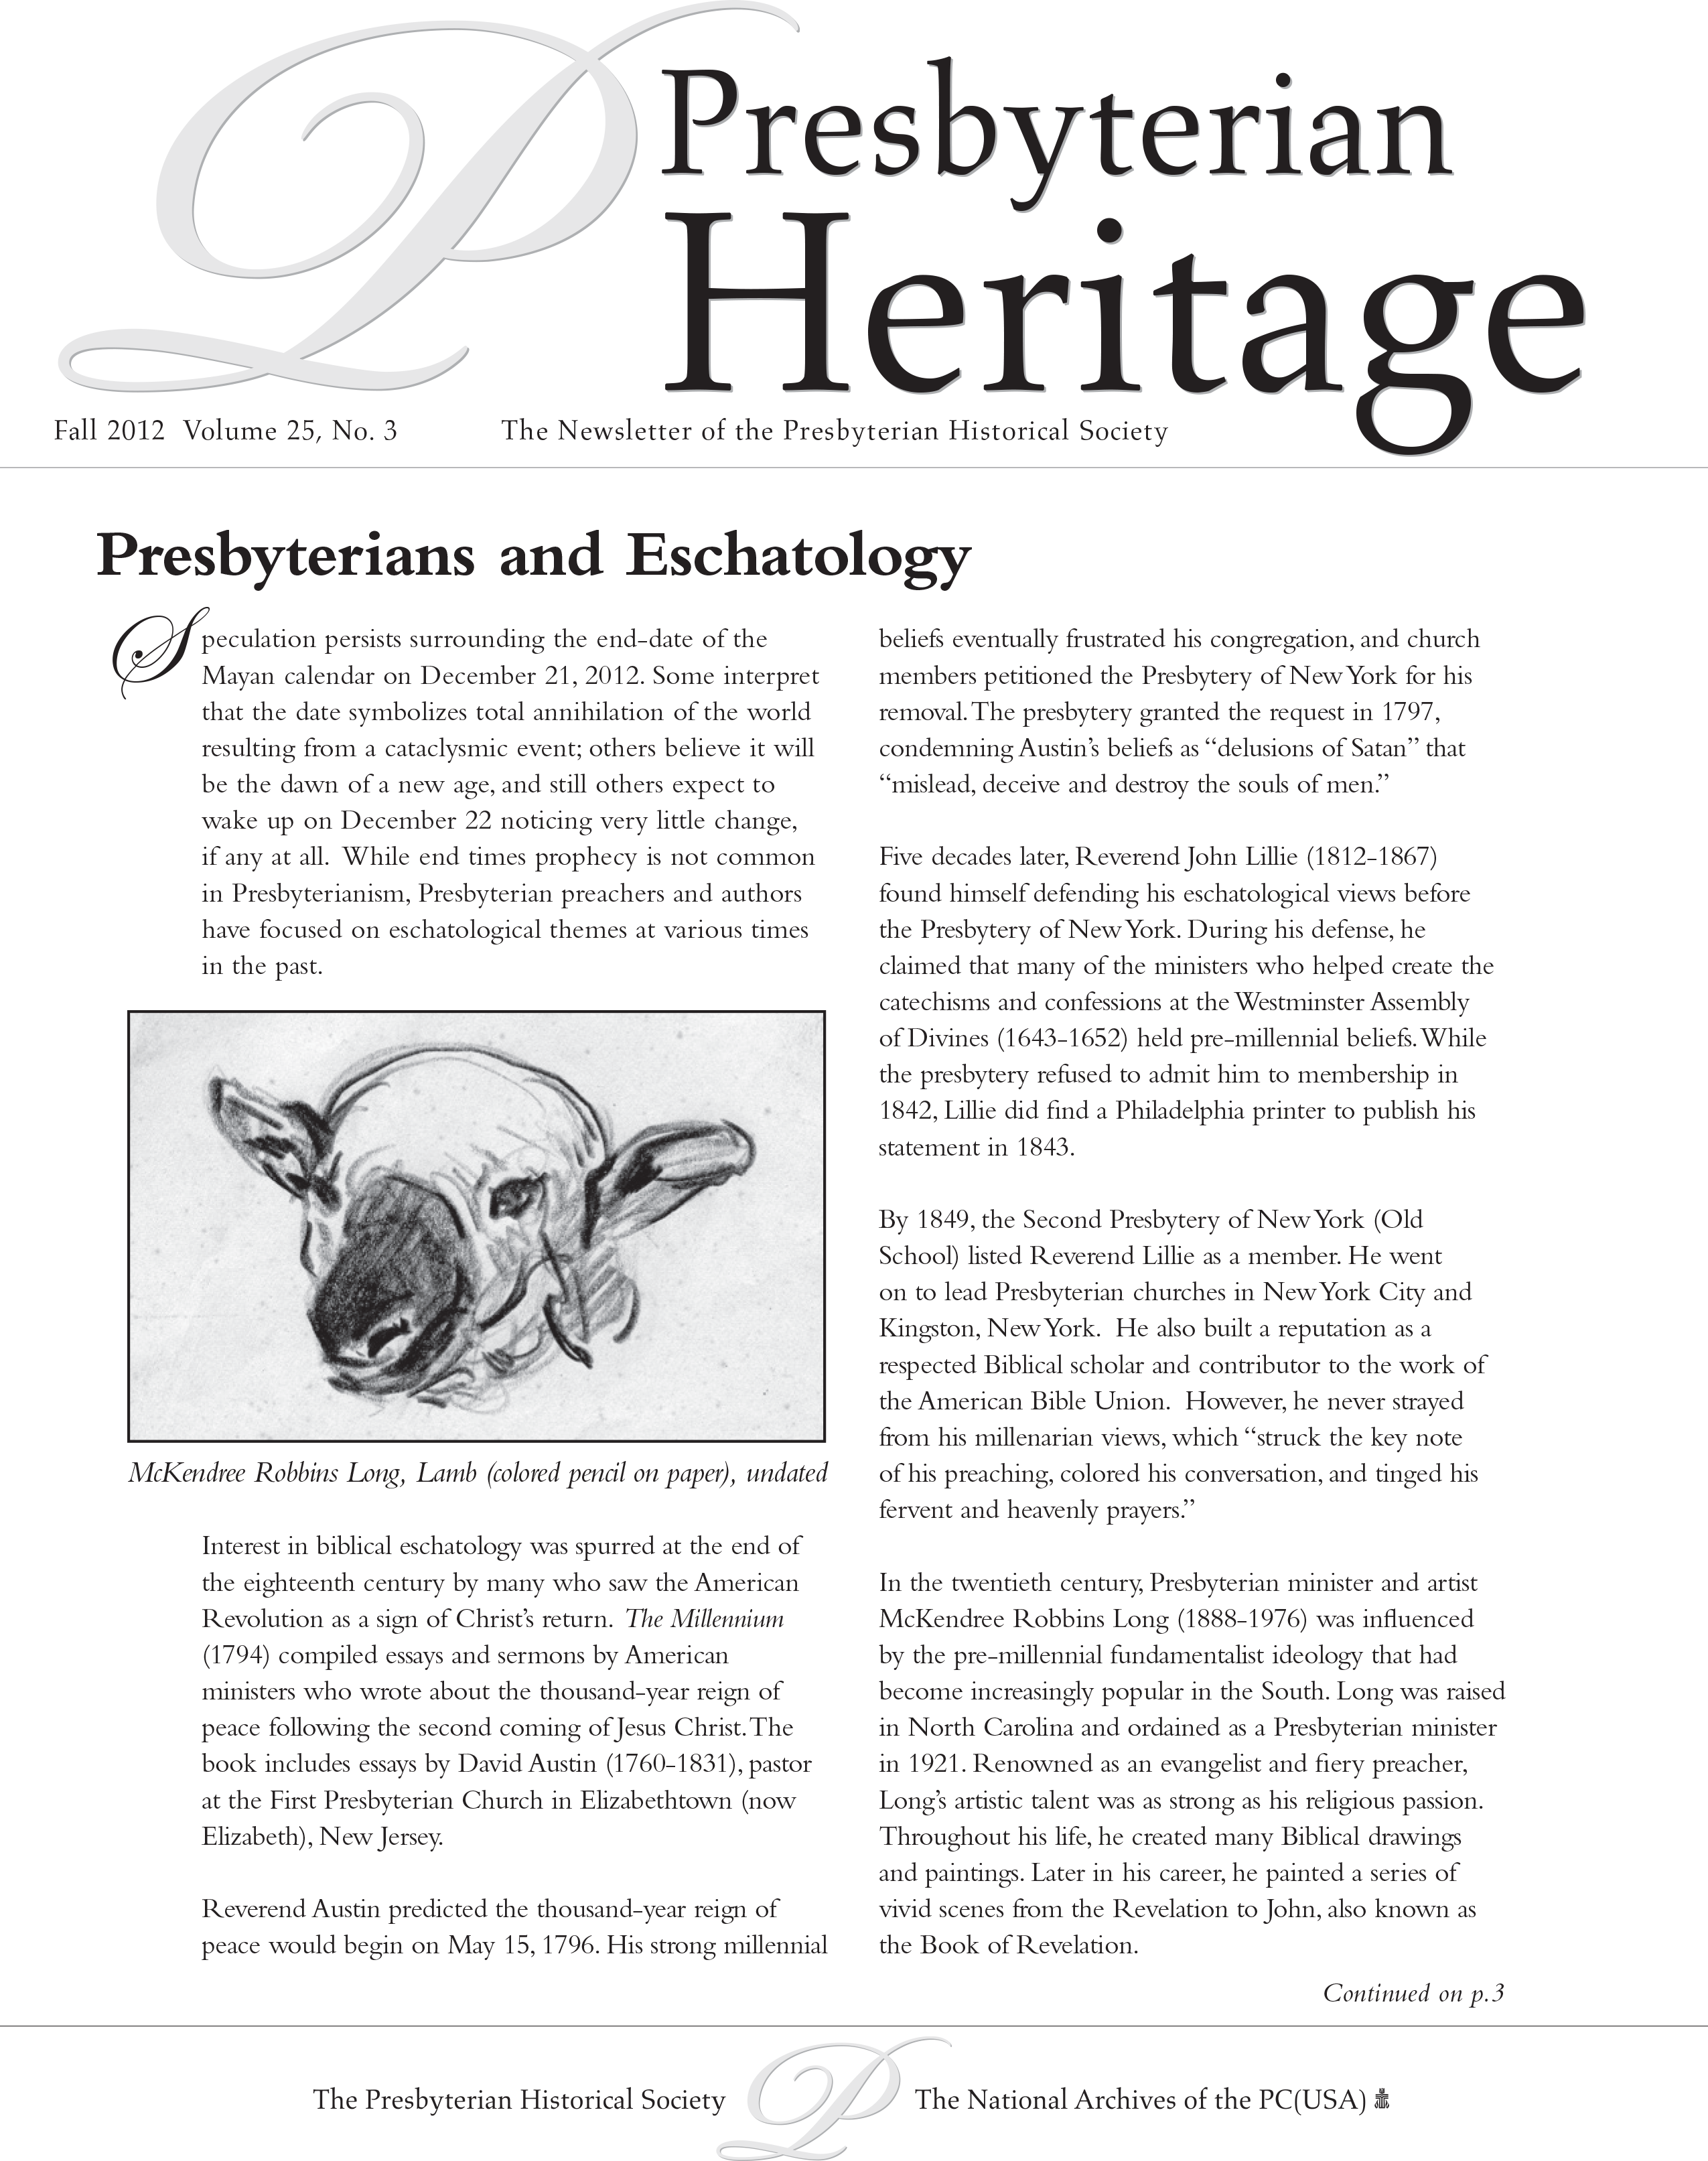 Presbyterian Heritage: The Newsletter for the Presbyterian Historical Society